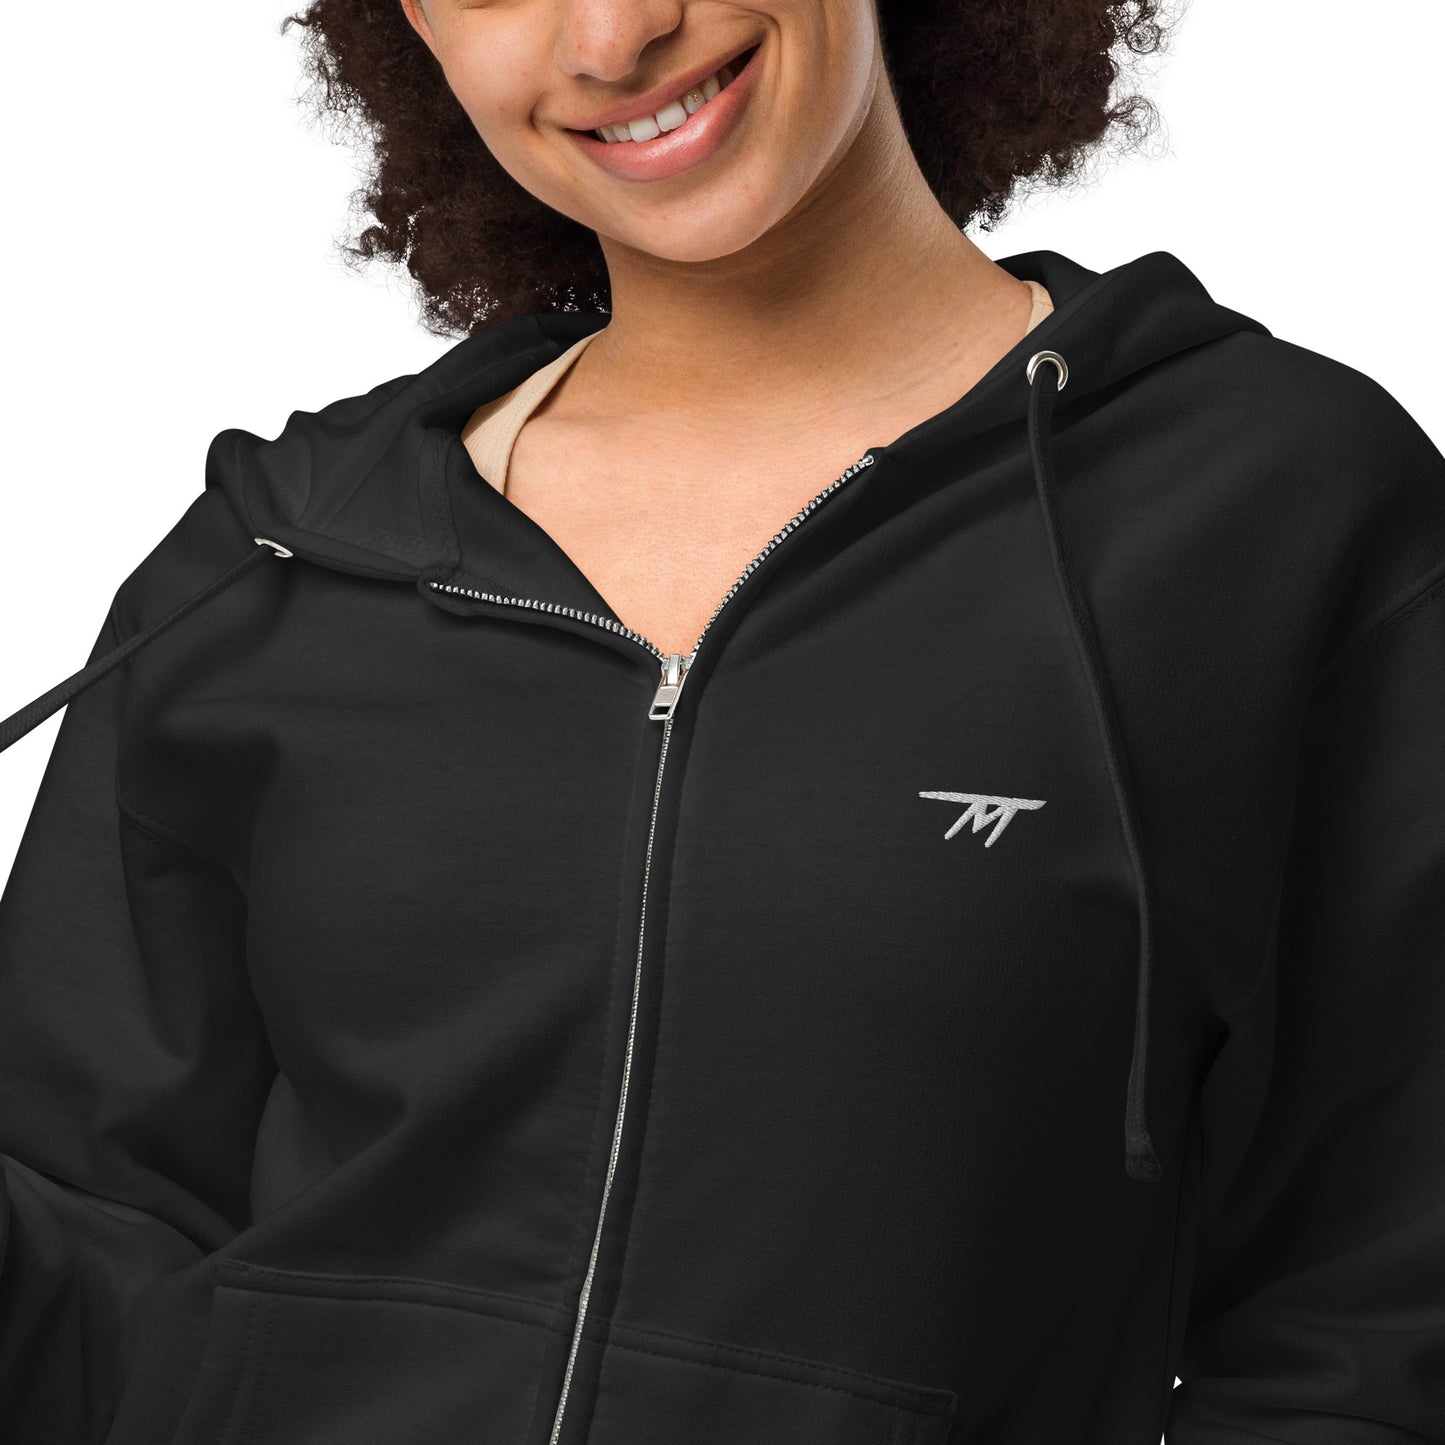 Onyx Fairy hoodie - Unisex fleece zip up